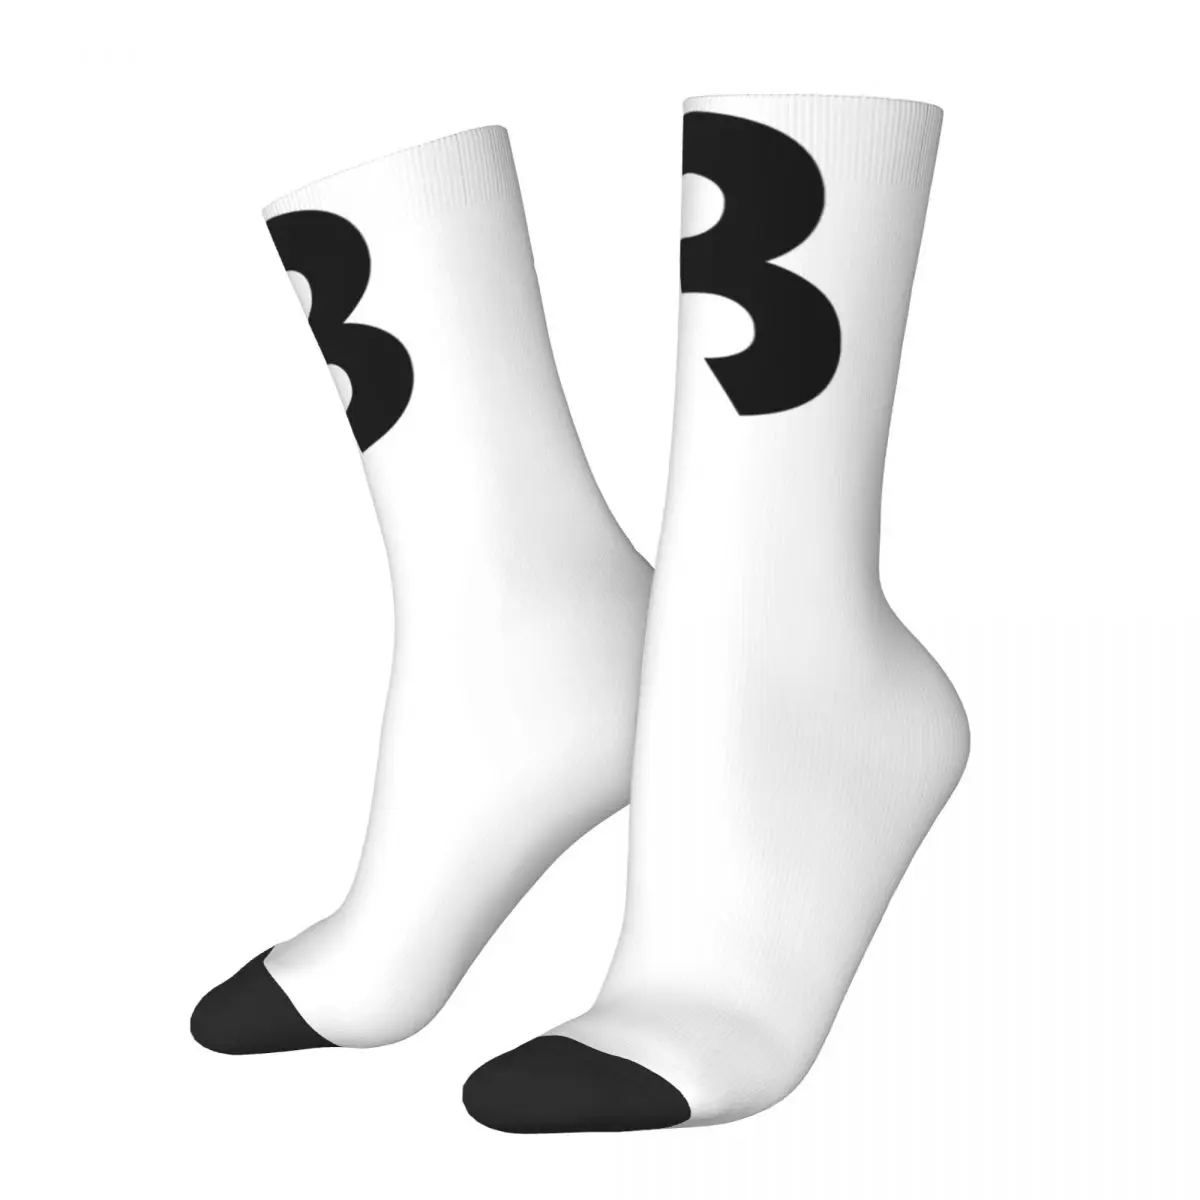 Cbum Logo CbumFitness Merch Crew Socks Sweat Absorbing Exercise Sport Crew Socks Cute for Womens Gifts